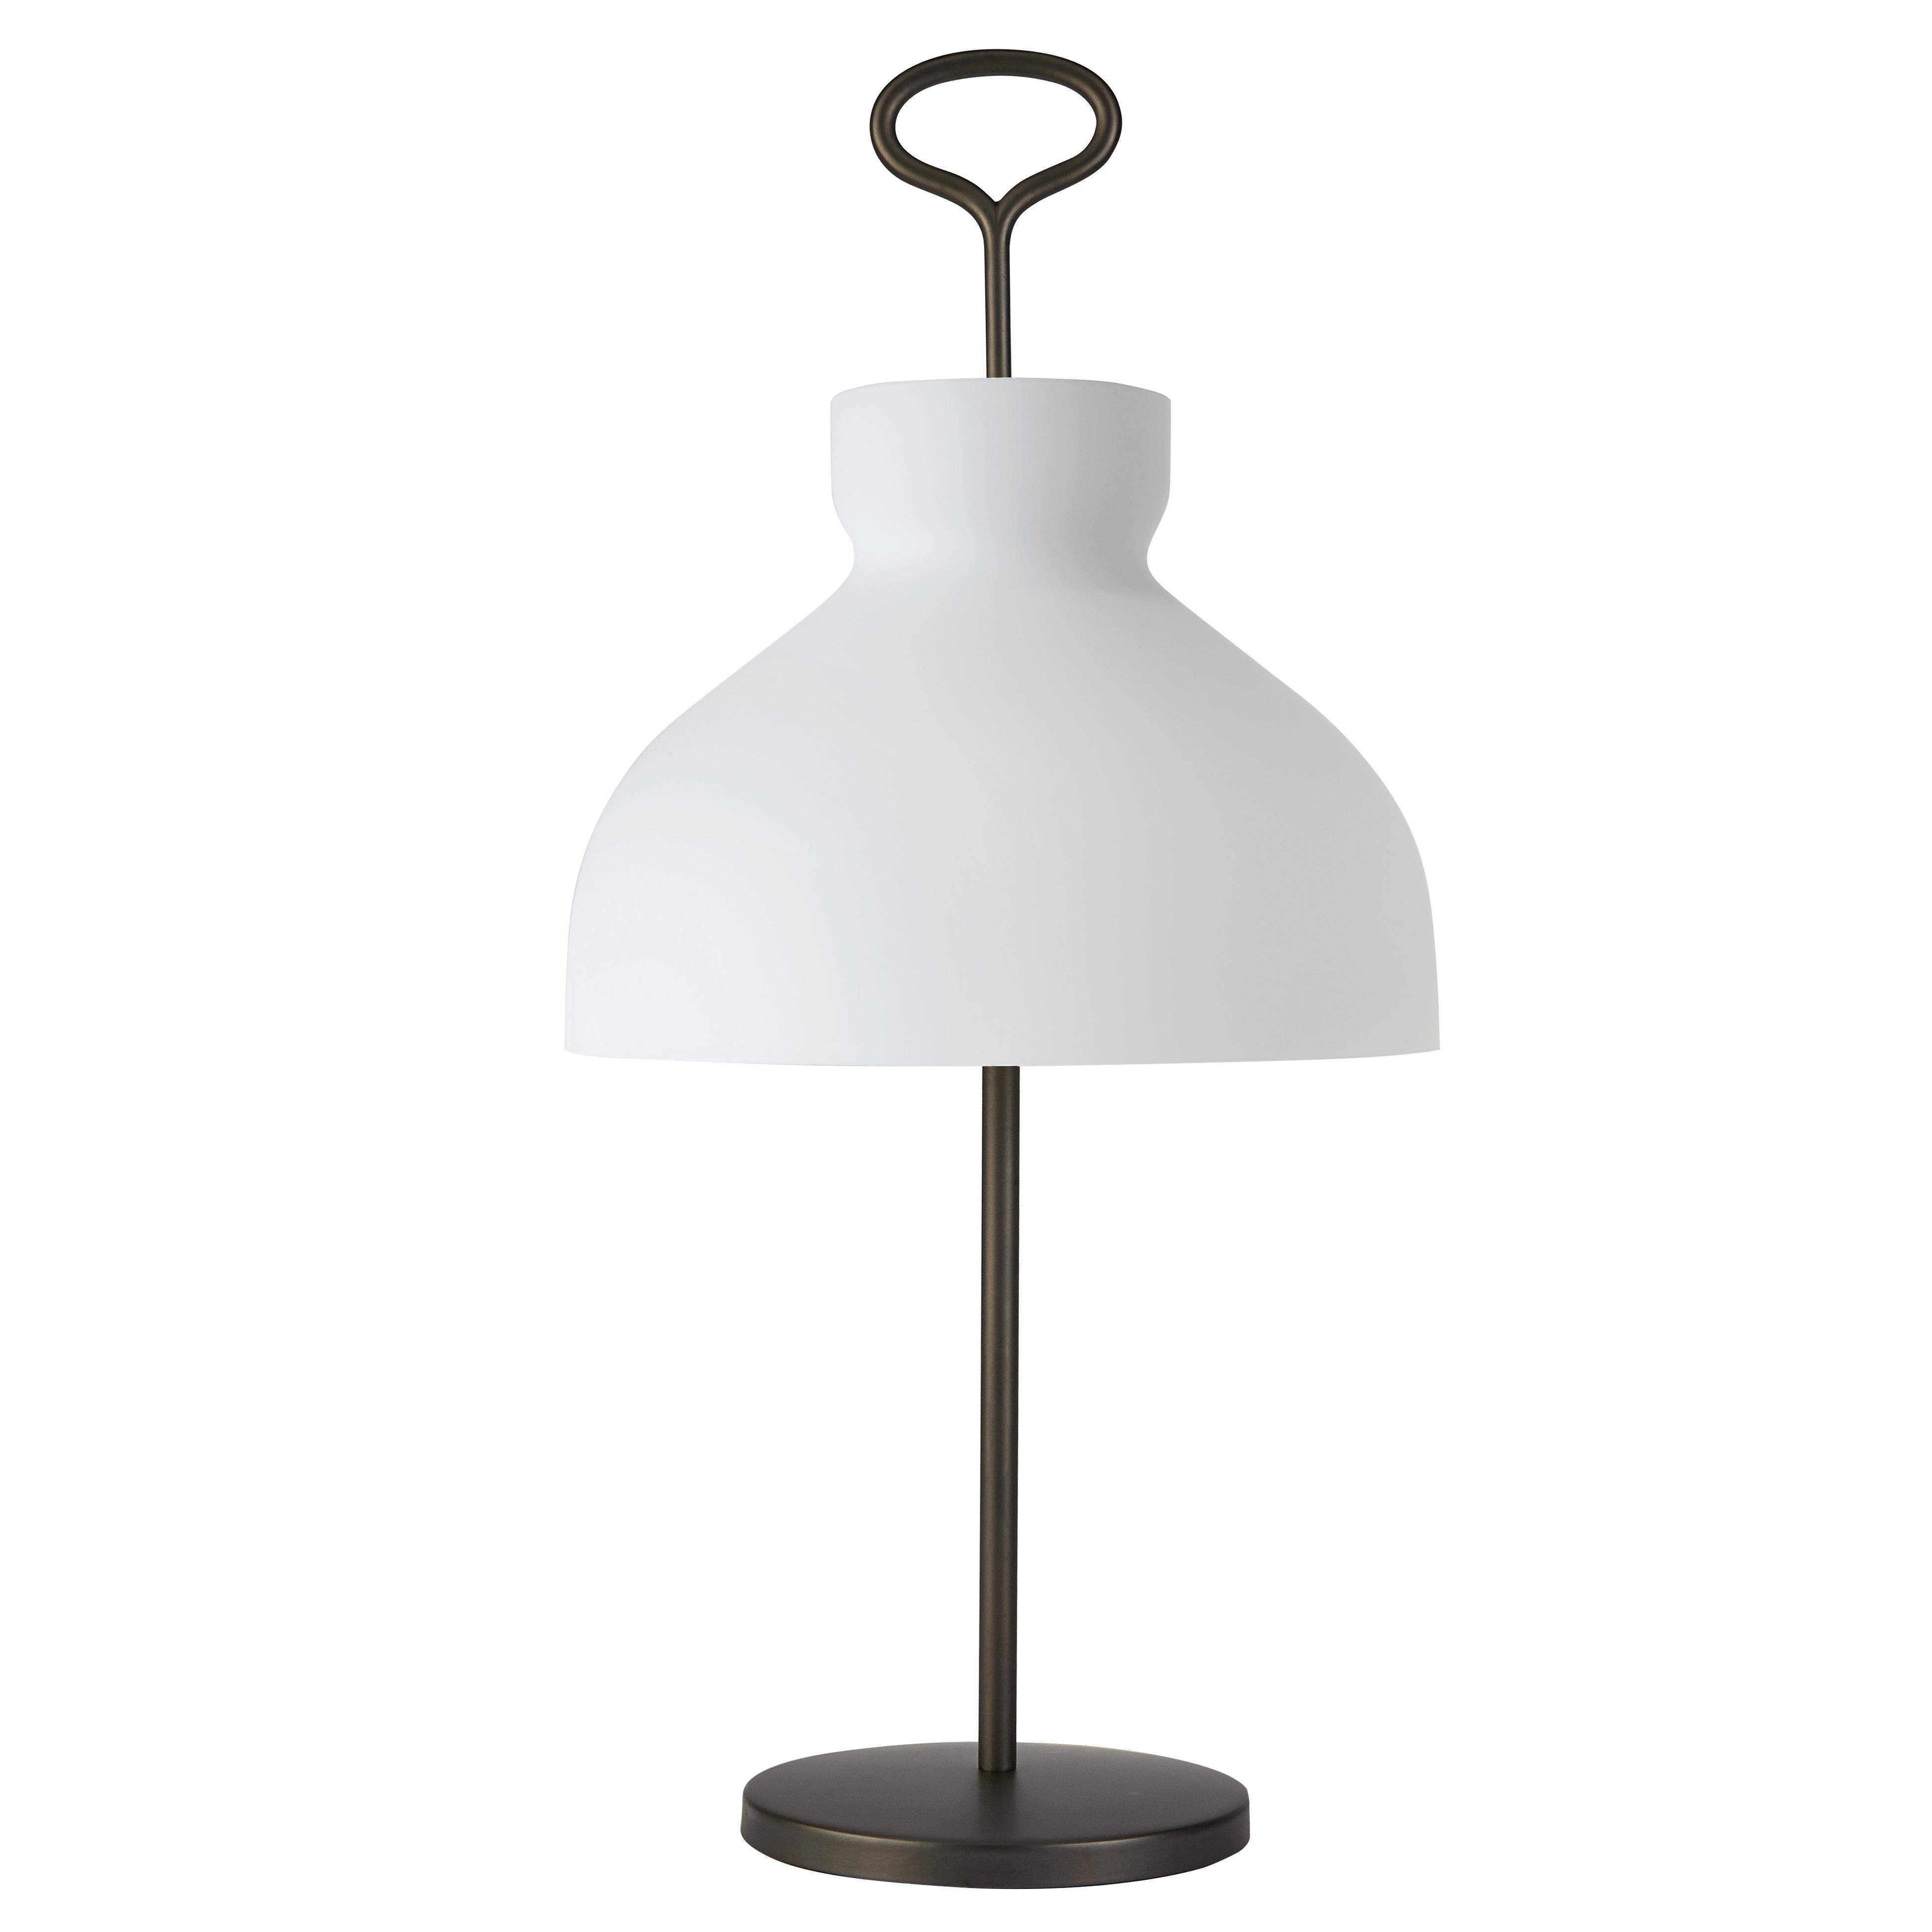 Large Ignazio Gardella 'Arenzano' Table Lamp in Satin Nickel and Glass For Sale 1